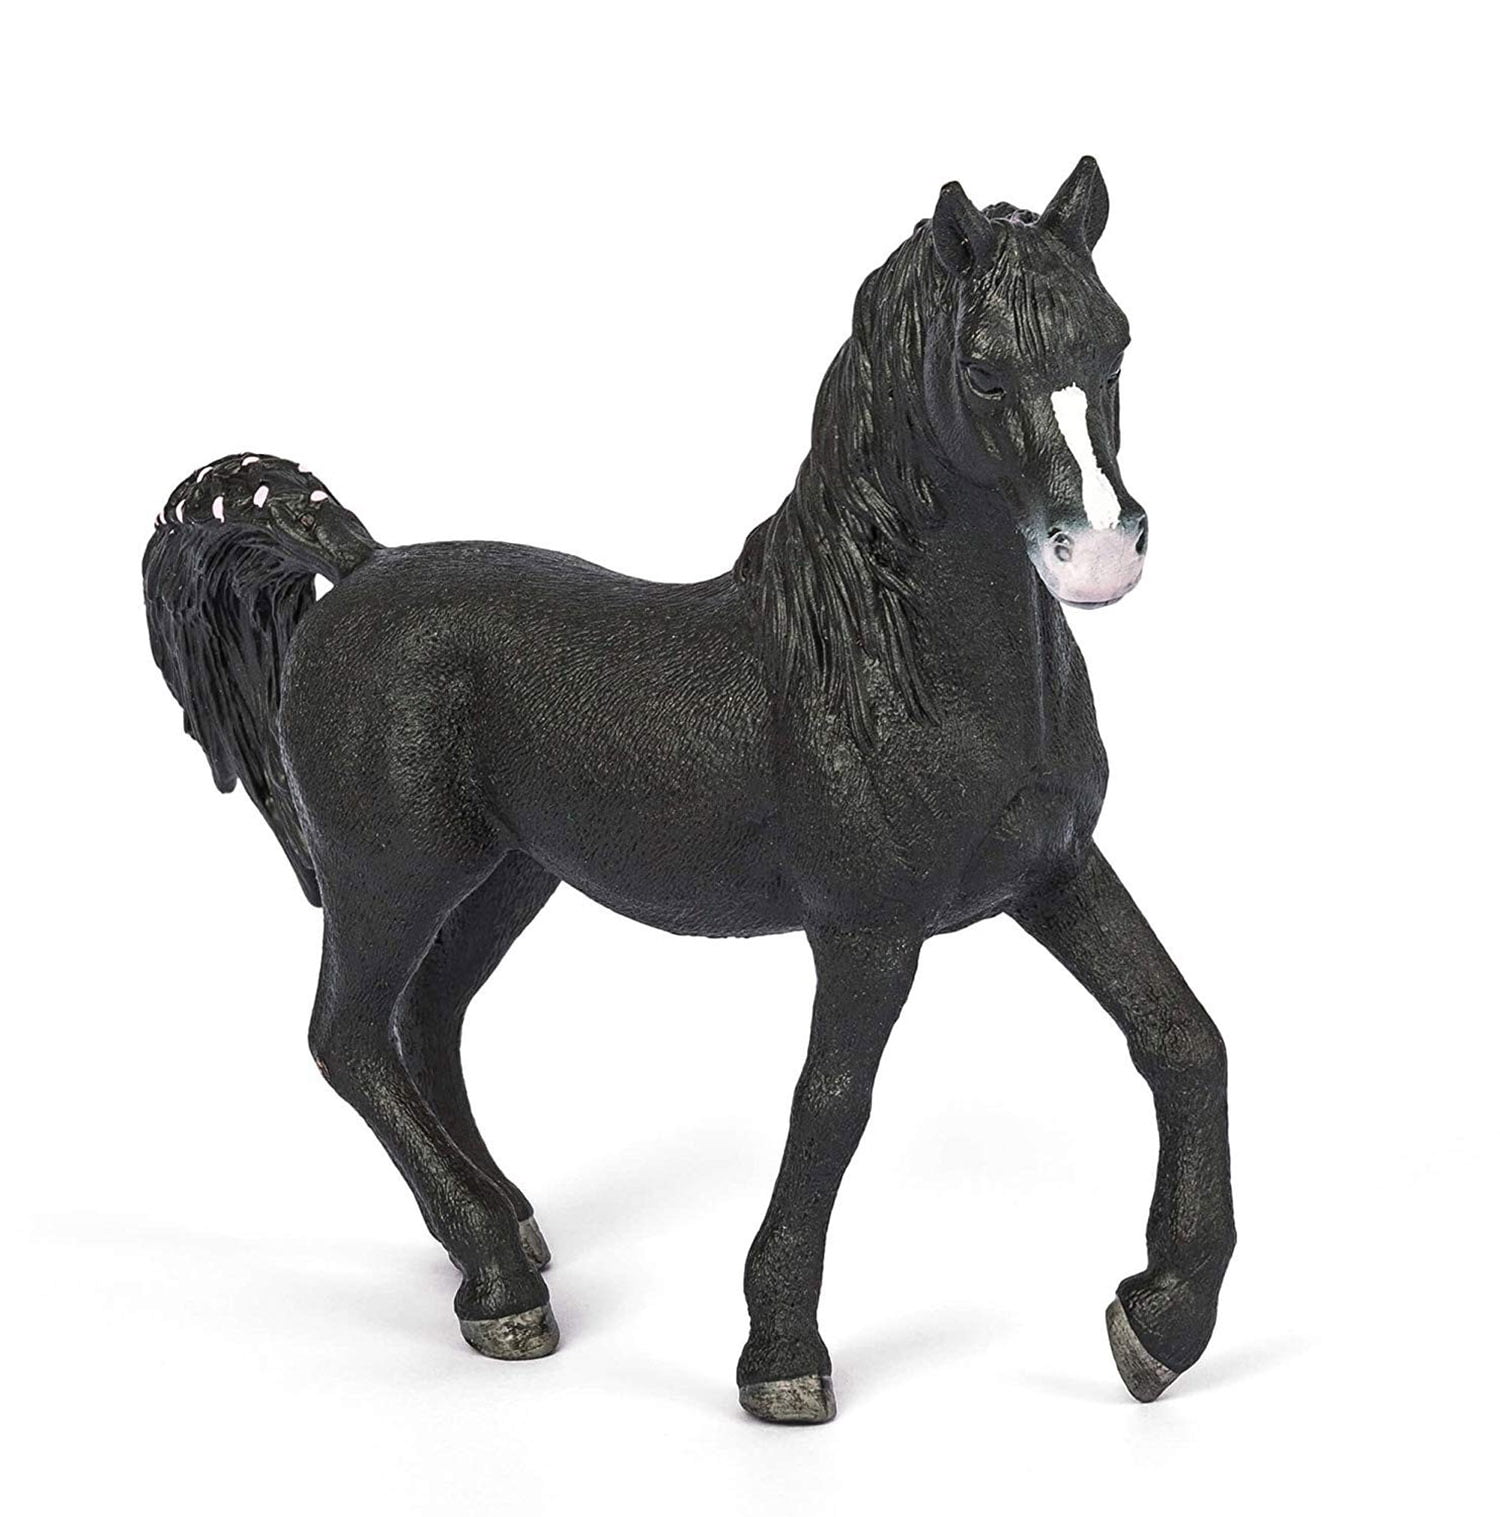 Toy horse models